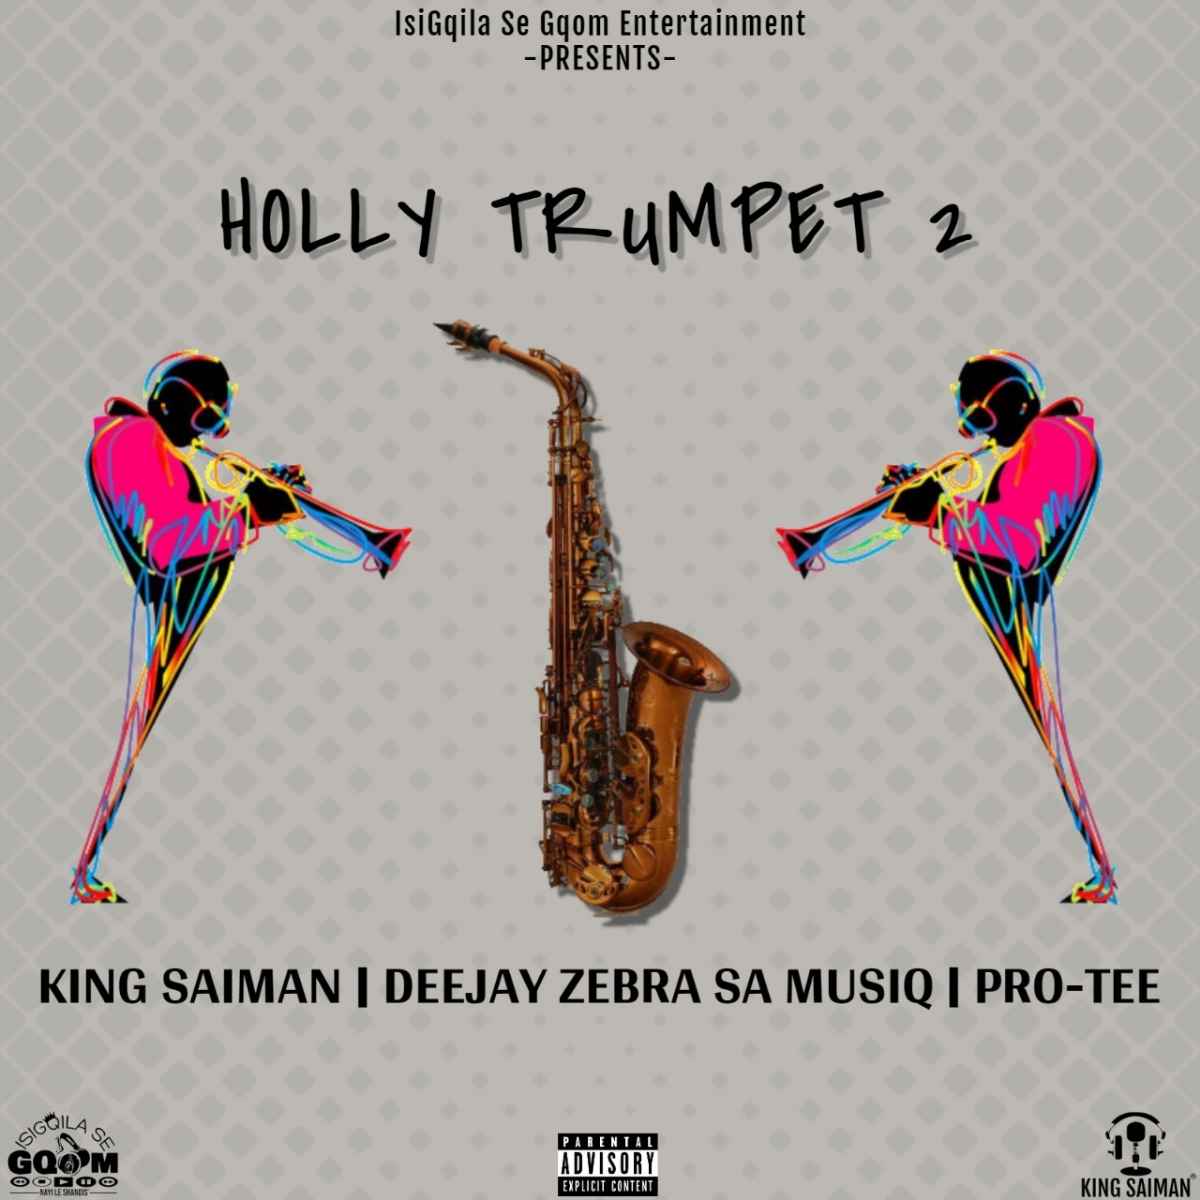 King saiman, Dj Zebra & Pro-Tee Holly Trumpet 2